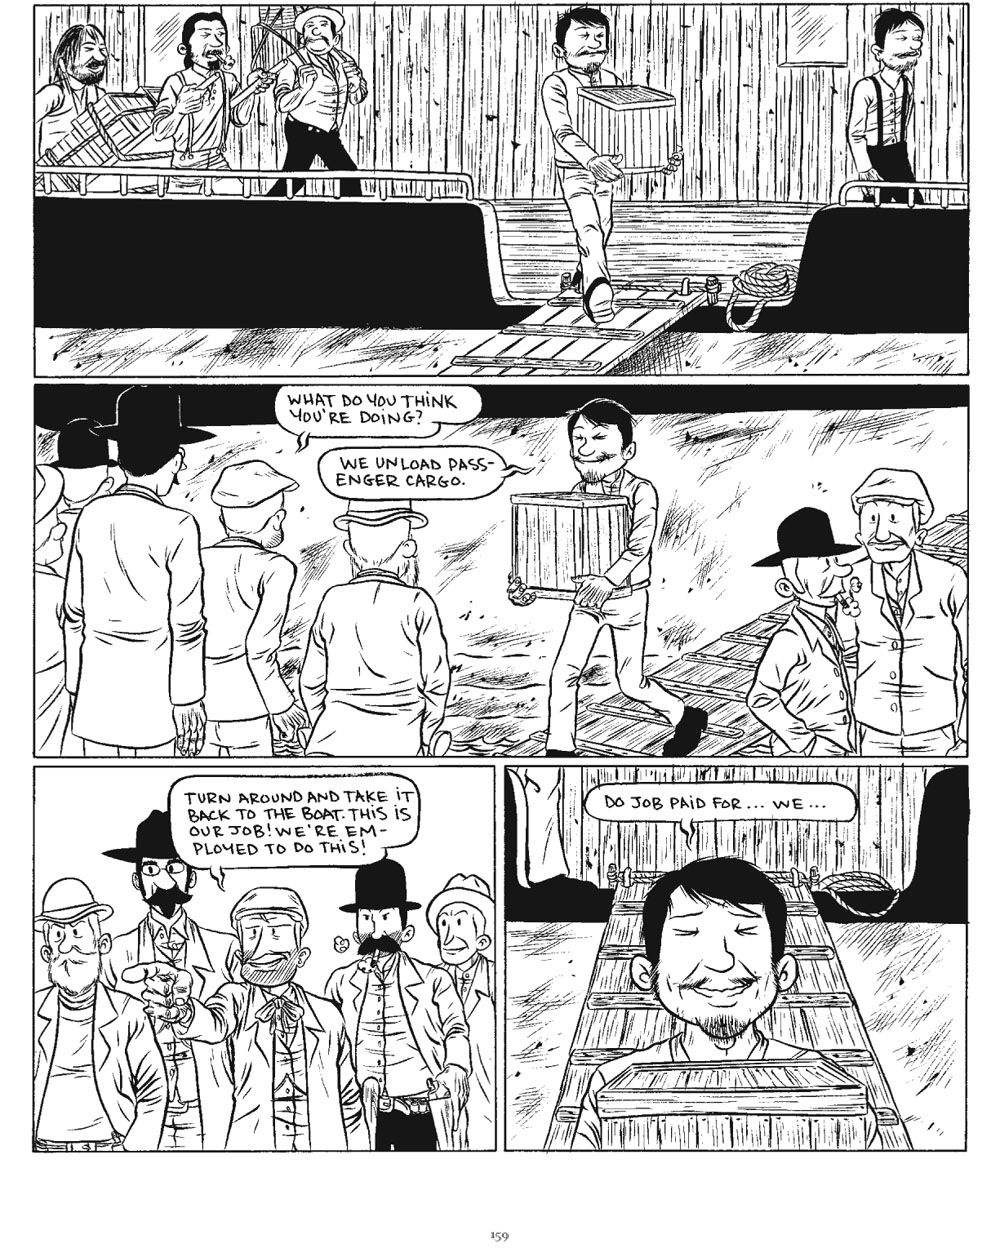 The Klondike Page 159